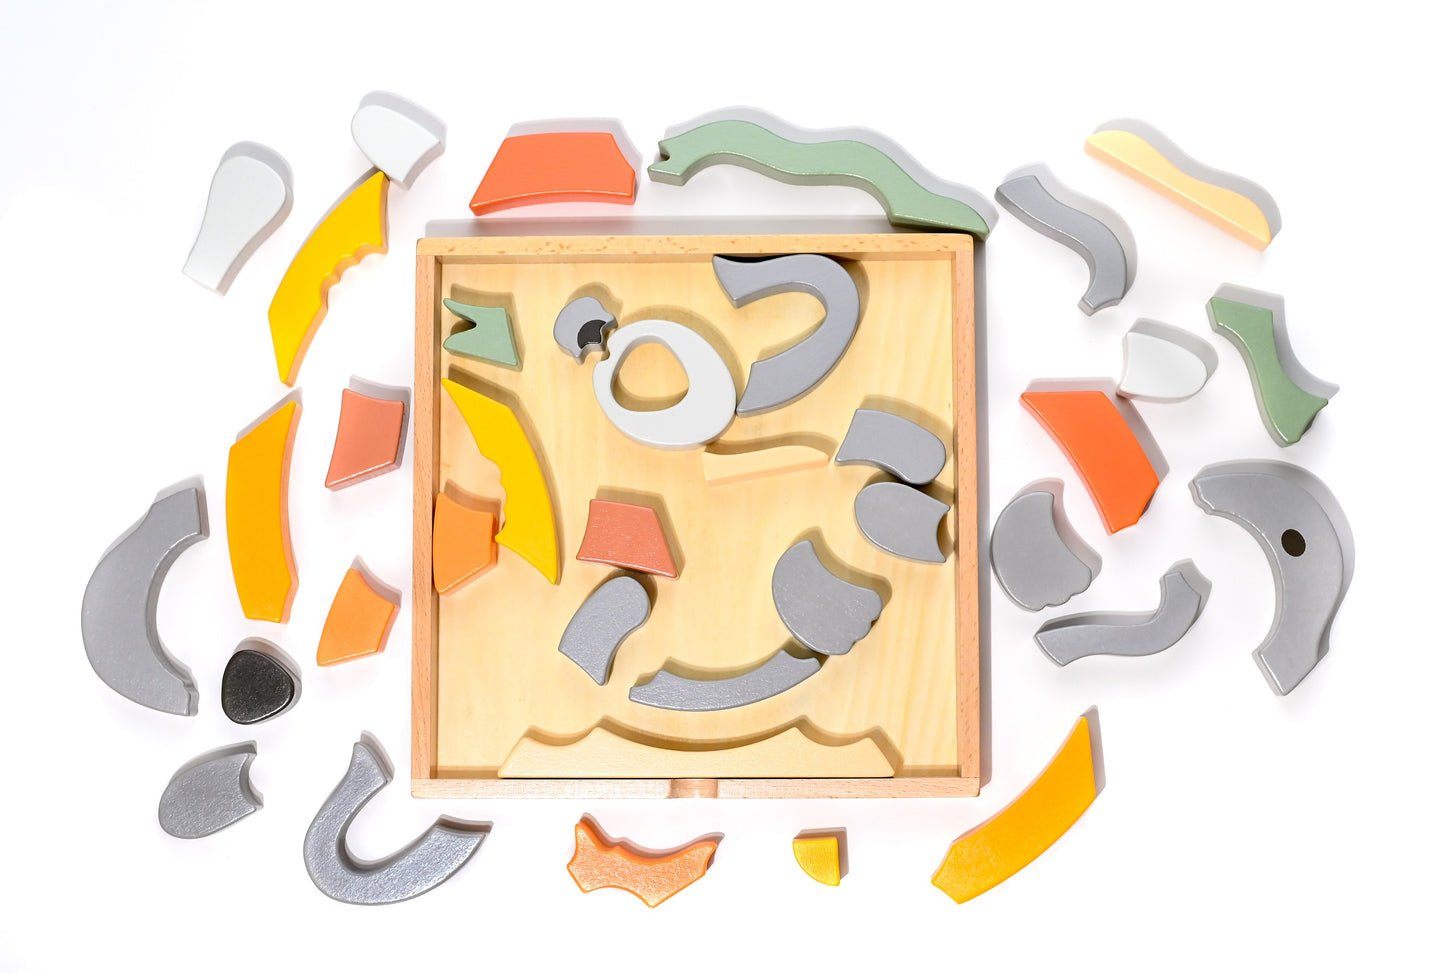 Kirra the Koala Abstract Building Block Puzzle / Home Decor Display - HAPPY GUMNUT